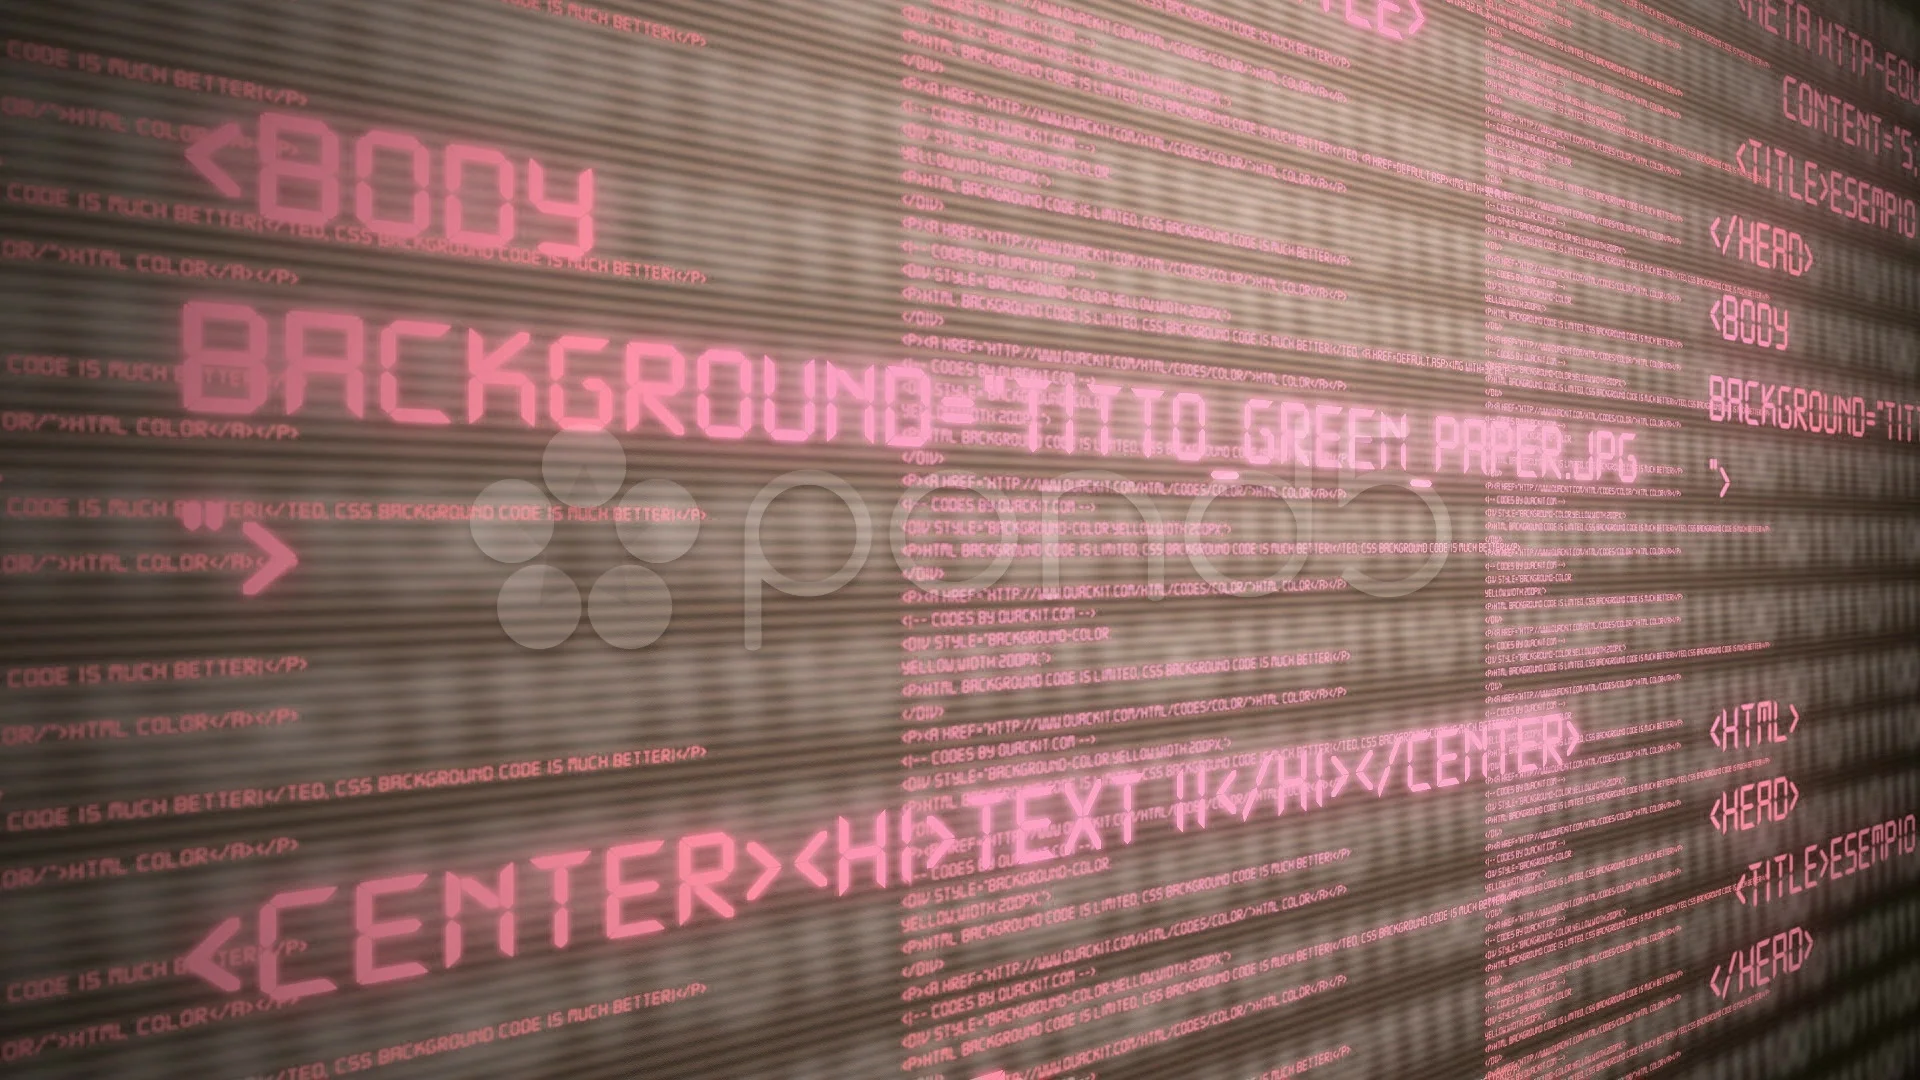 html background image pink